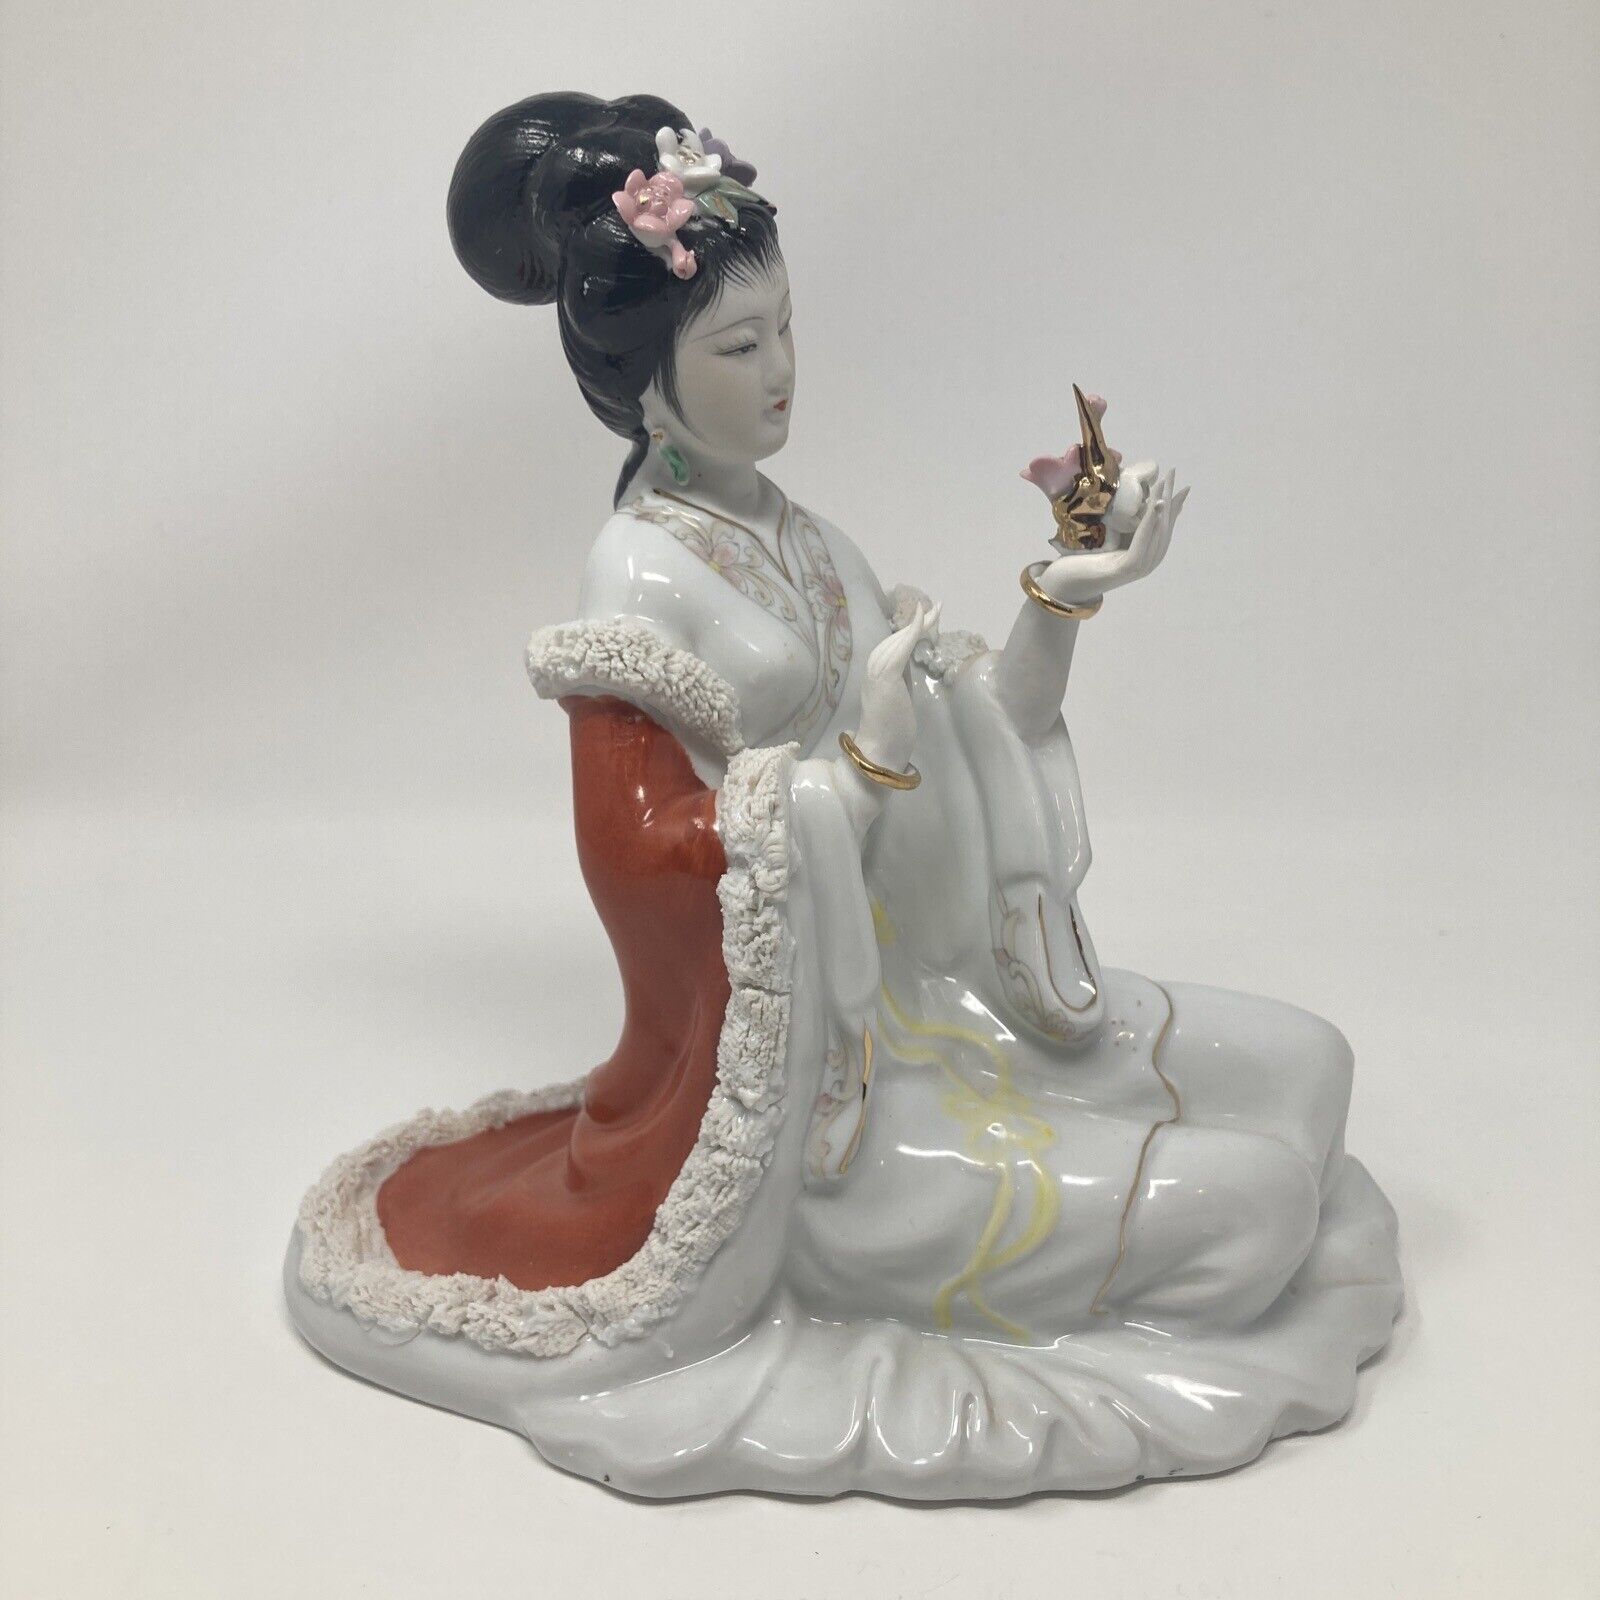 Large Geisha Porcelain Figurine. Approximately 9” Tall, 8.5” Long. Beautiful 